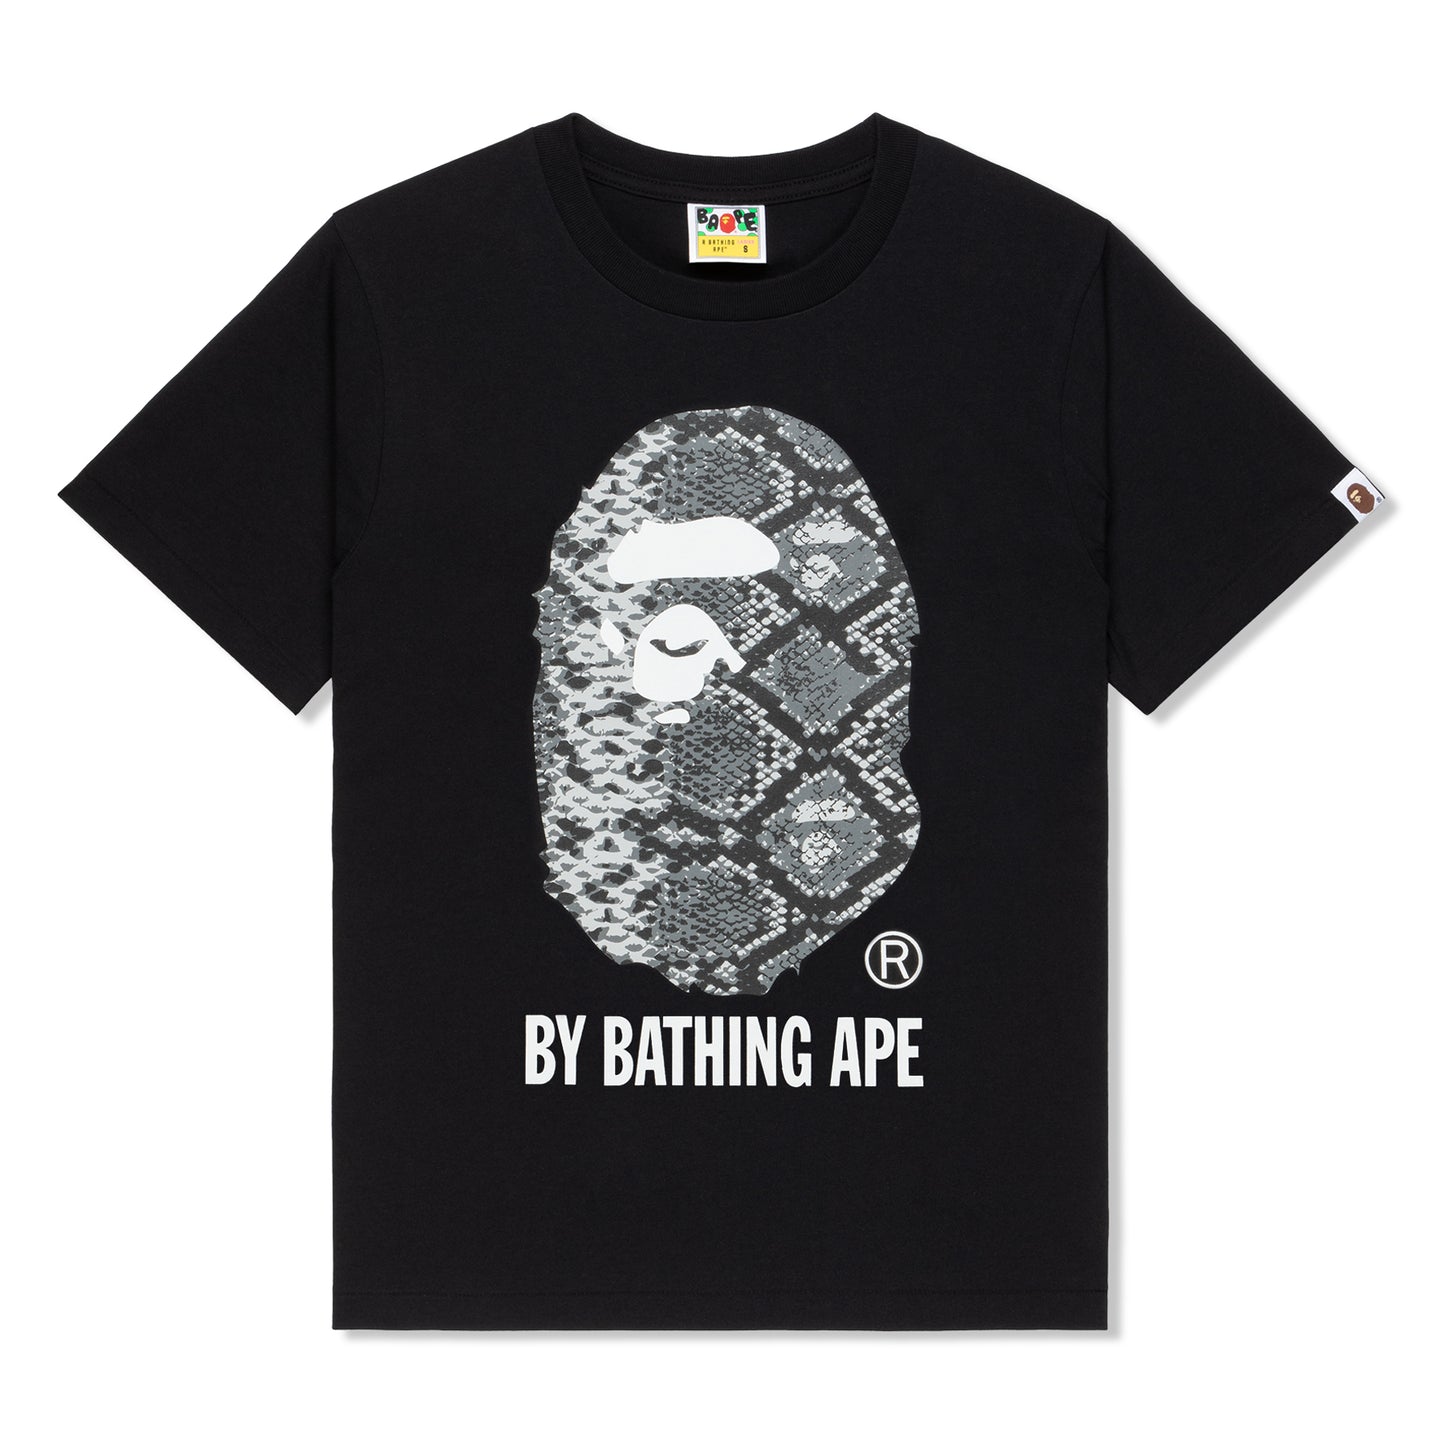 A Bathing Ape Womens Bape Snake by Bathing Ape Tee (Black/Grey)